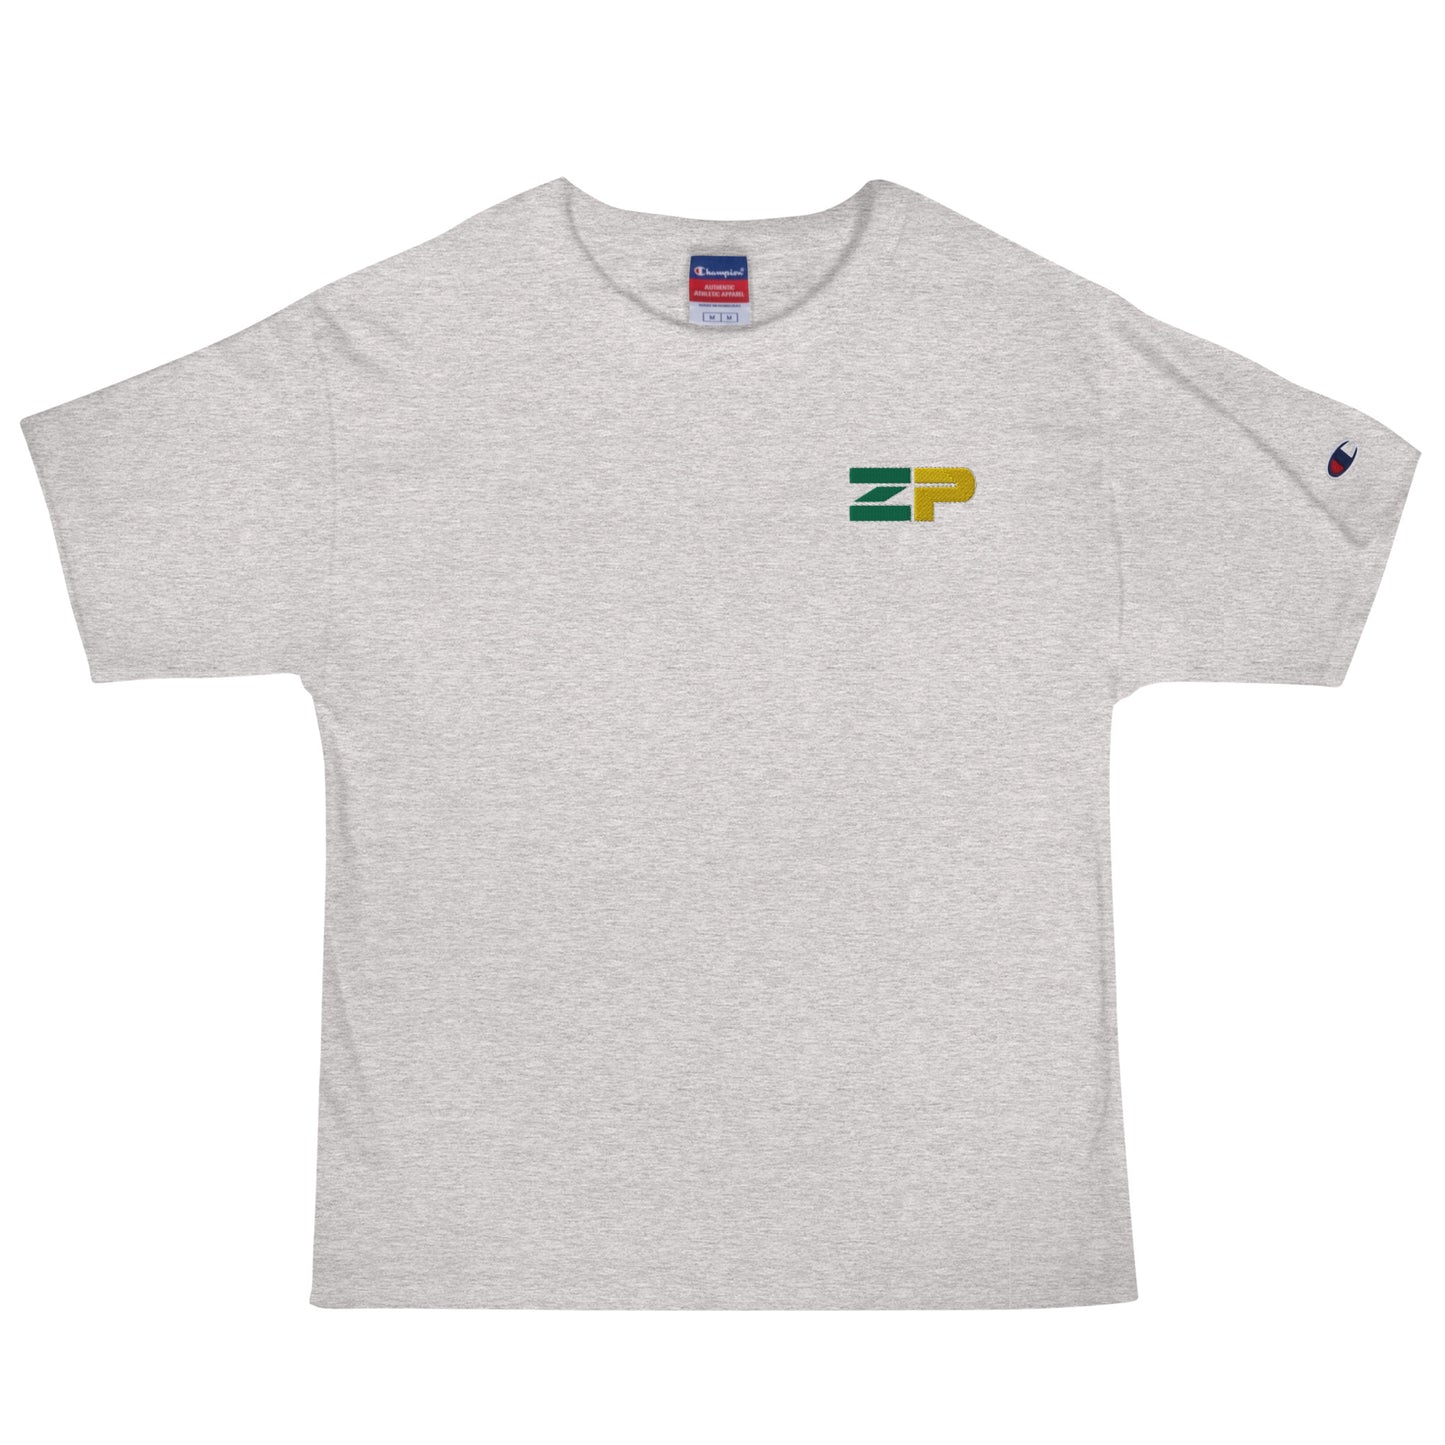 ZP Embroidered Men's Champion T-Shirt